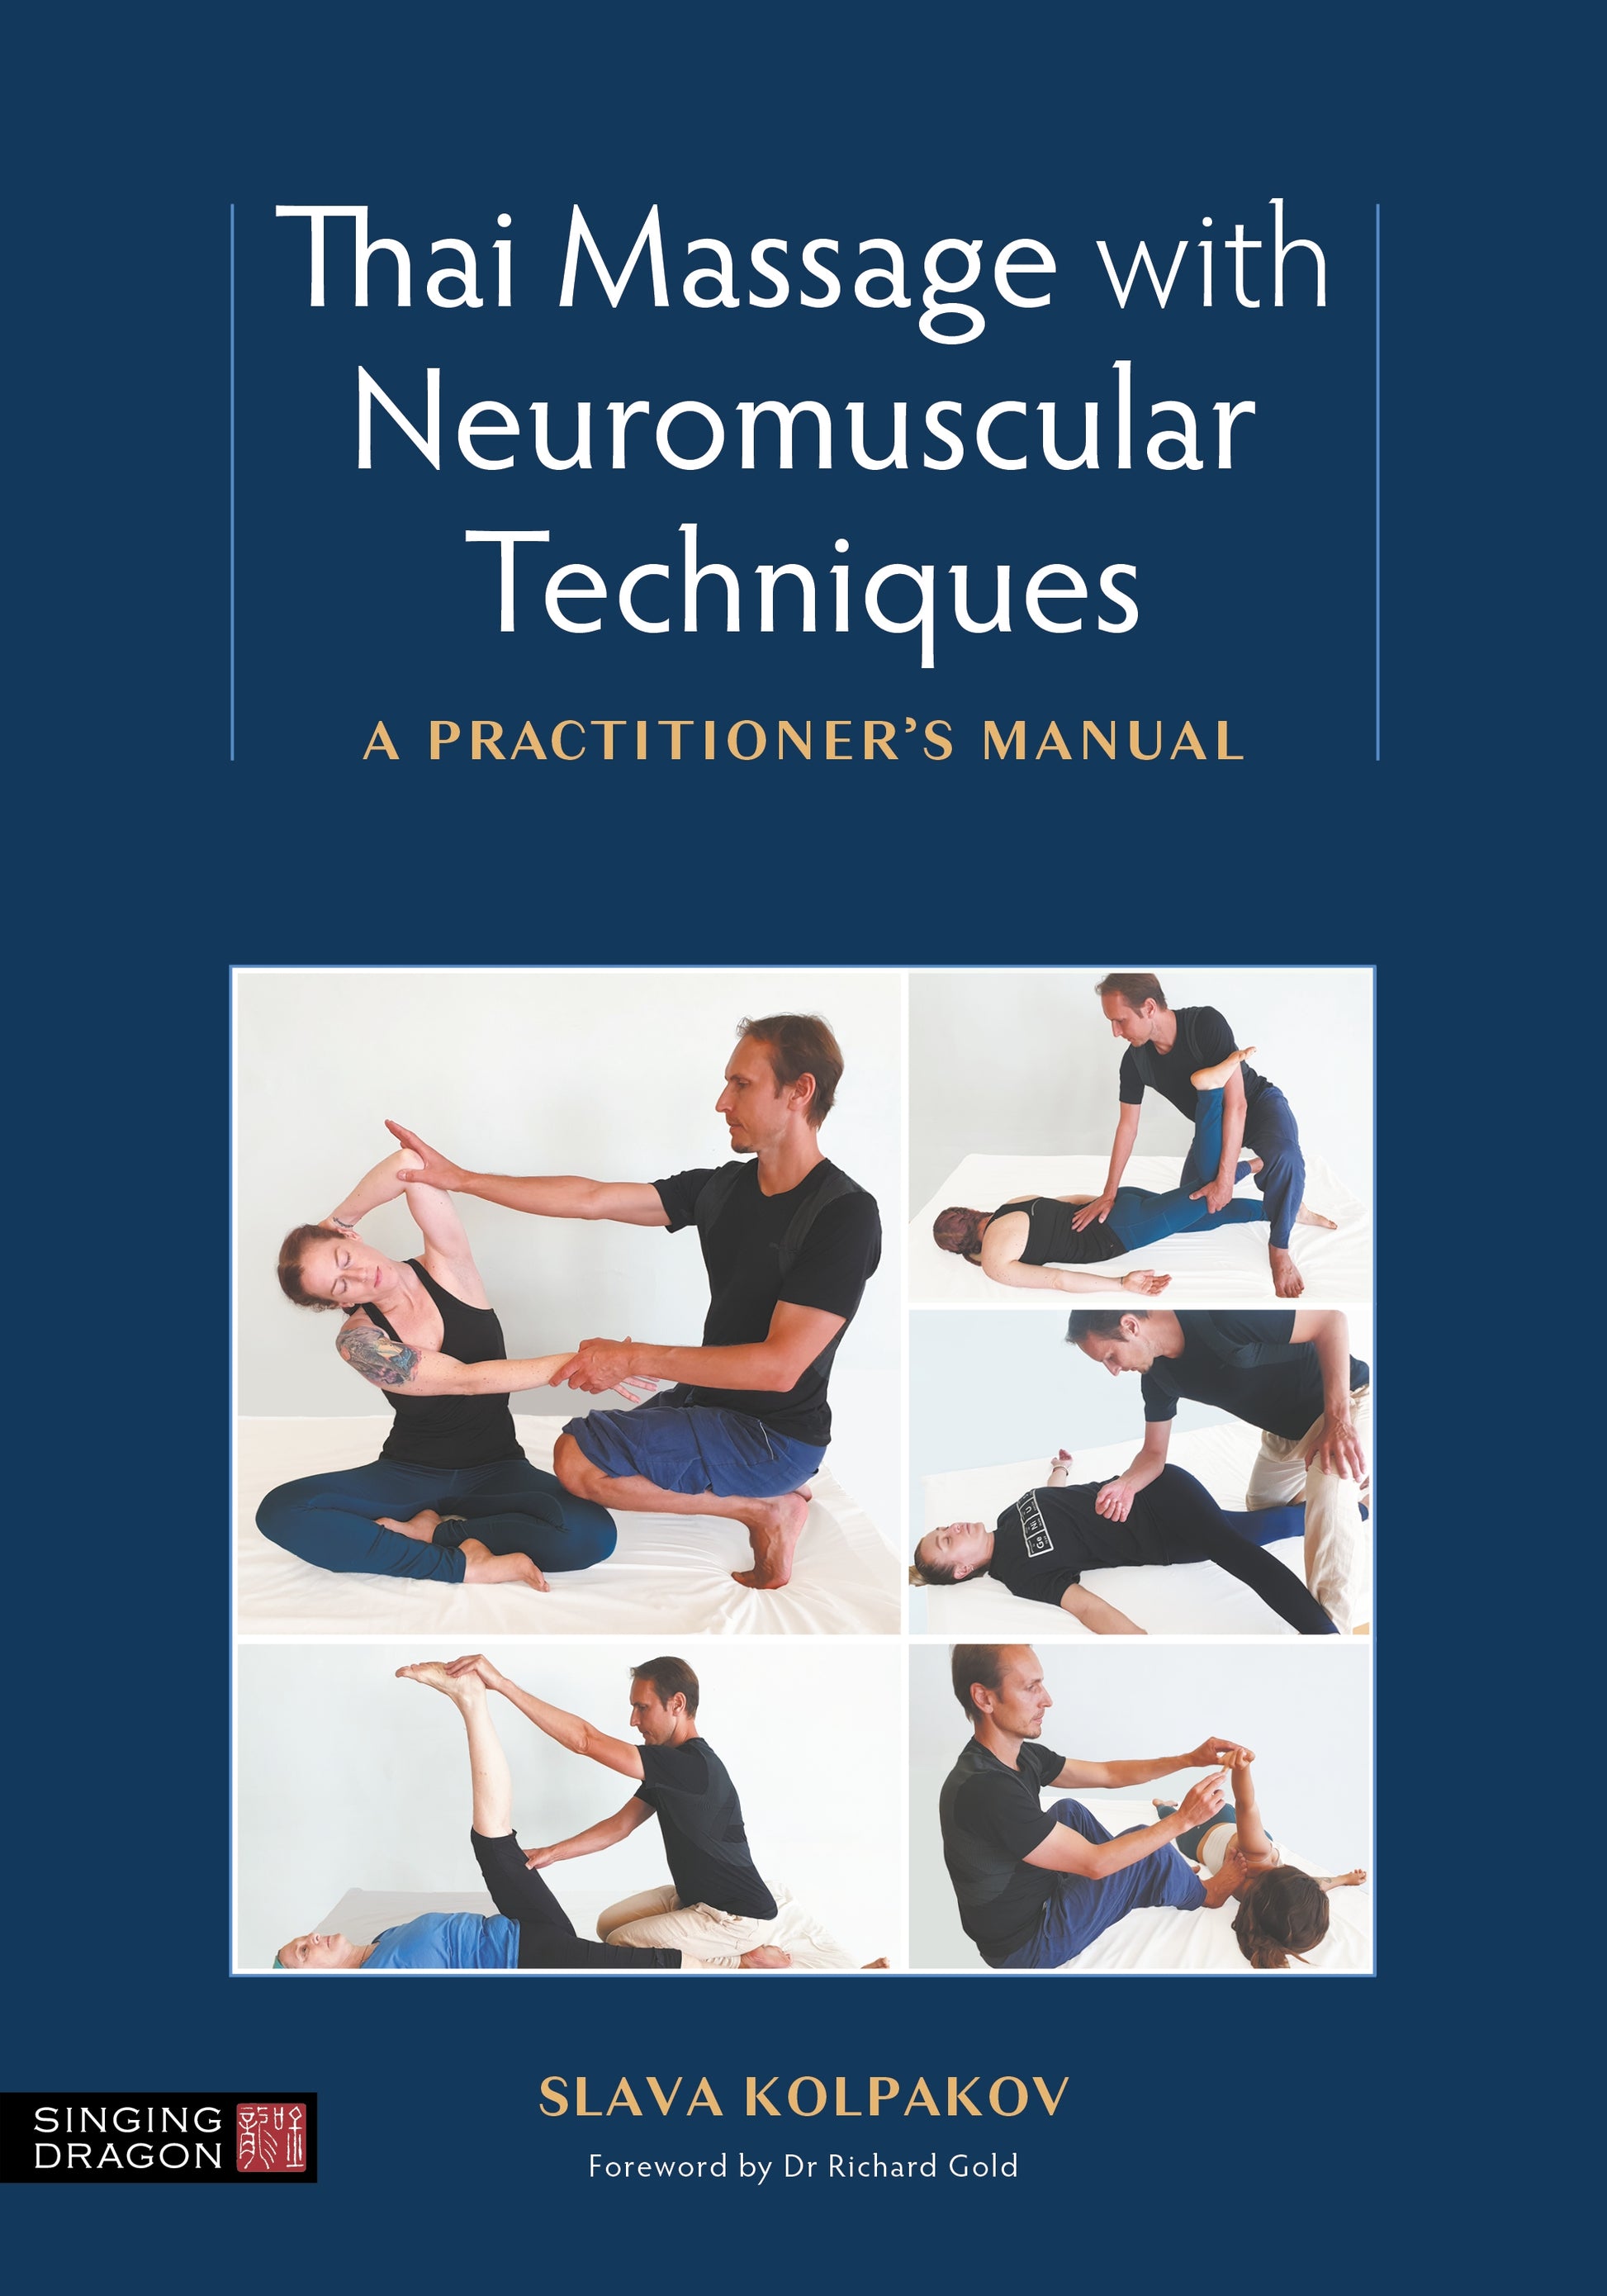 Thai Massage with Neuromuscular Techniques by Dr. Richard Gold, Slava Kolpakov